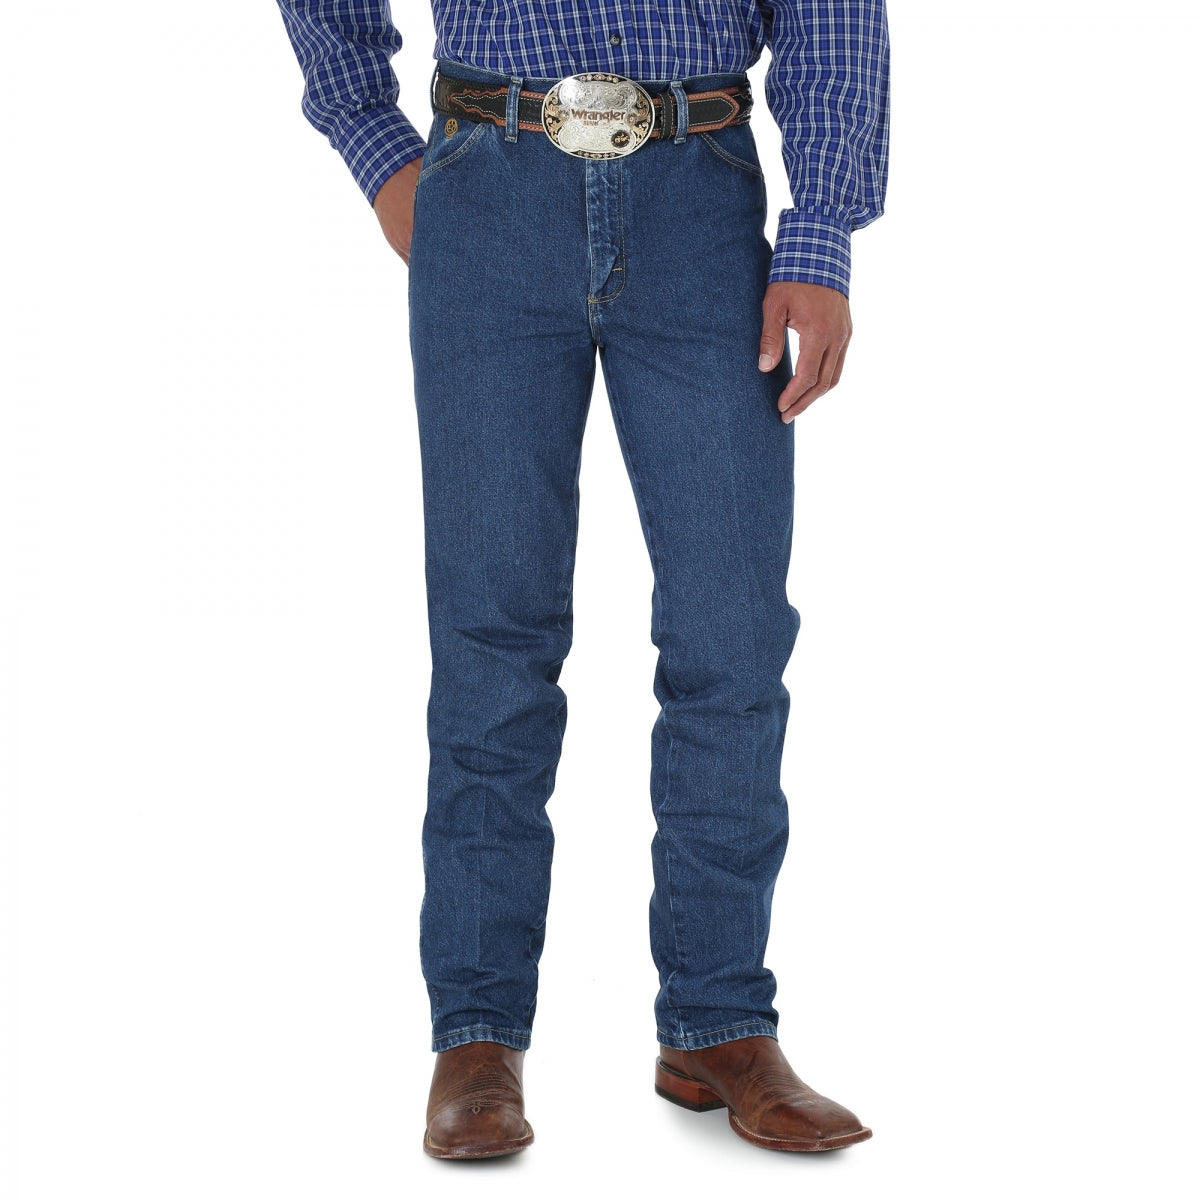 Wrangler George Strait Slim Fit Jeans - 936GSHD – BJ's Western Store